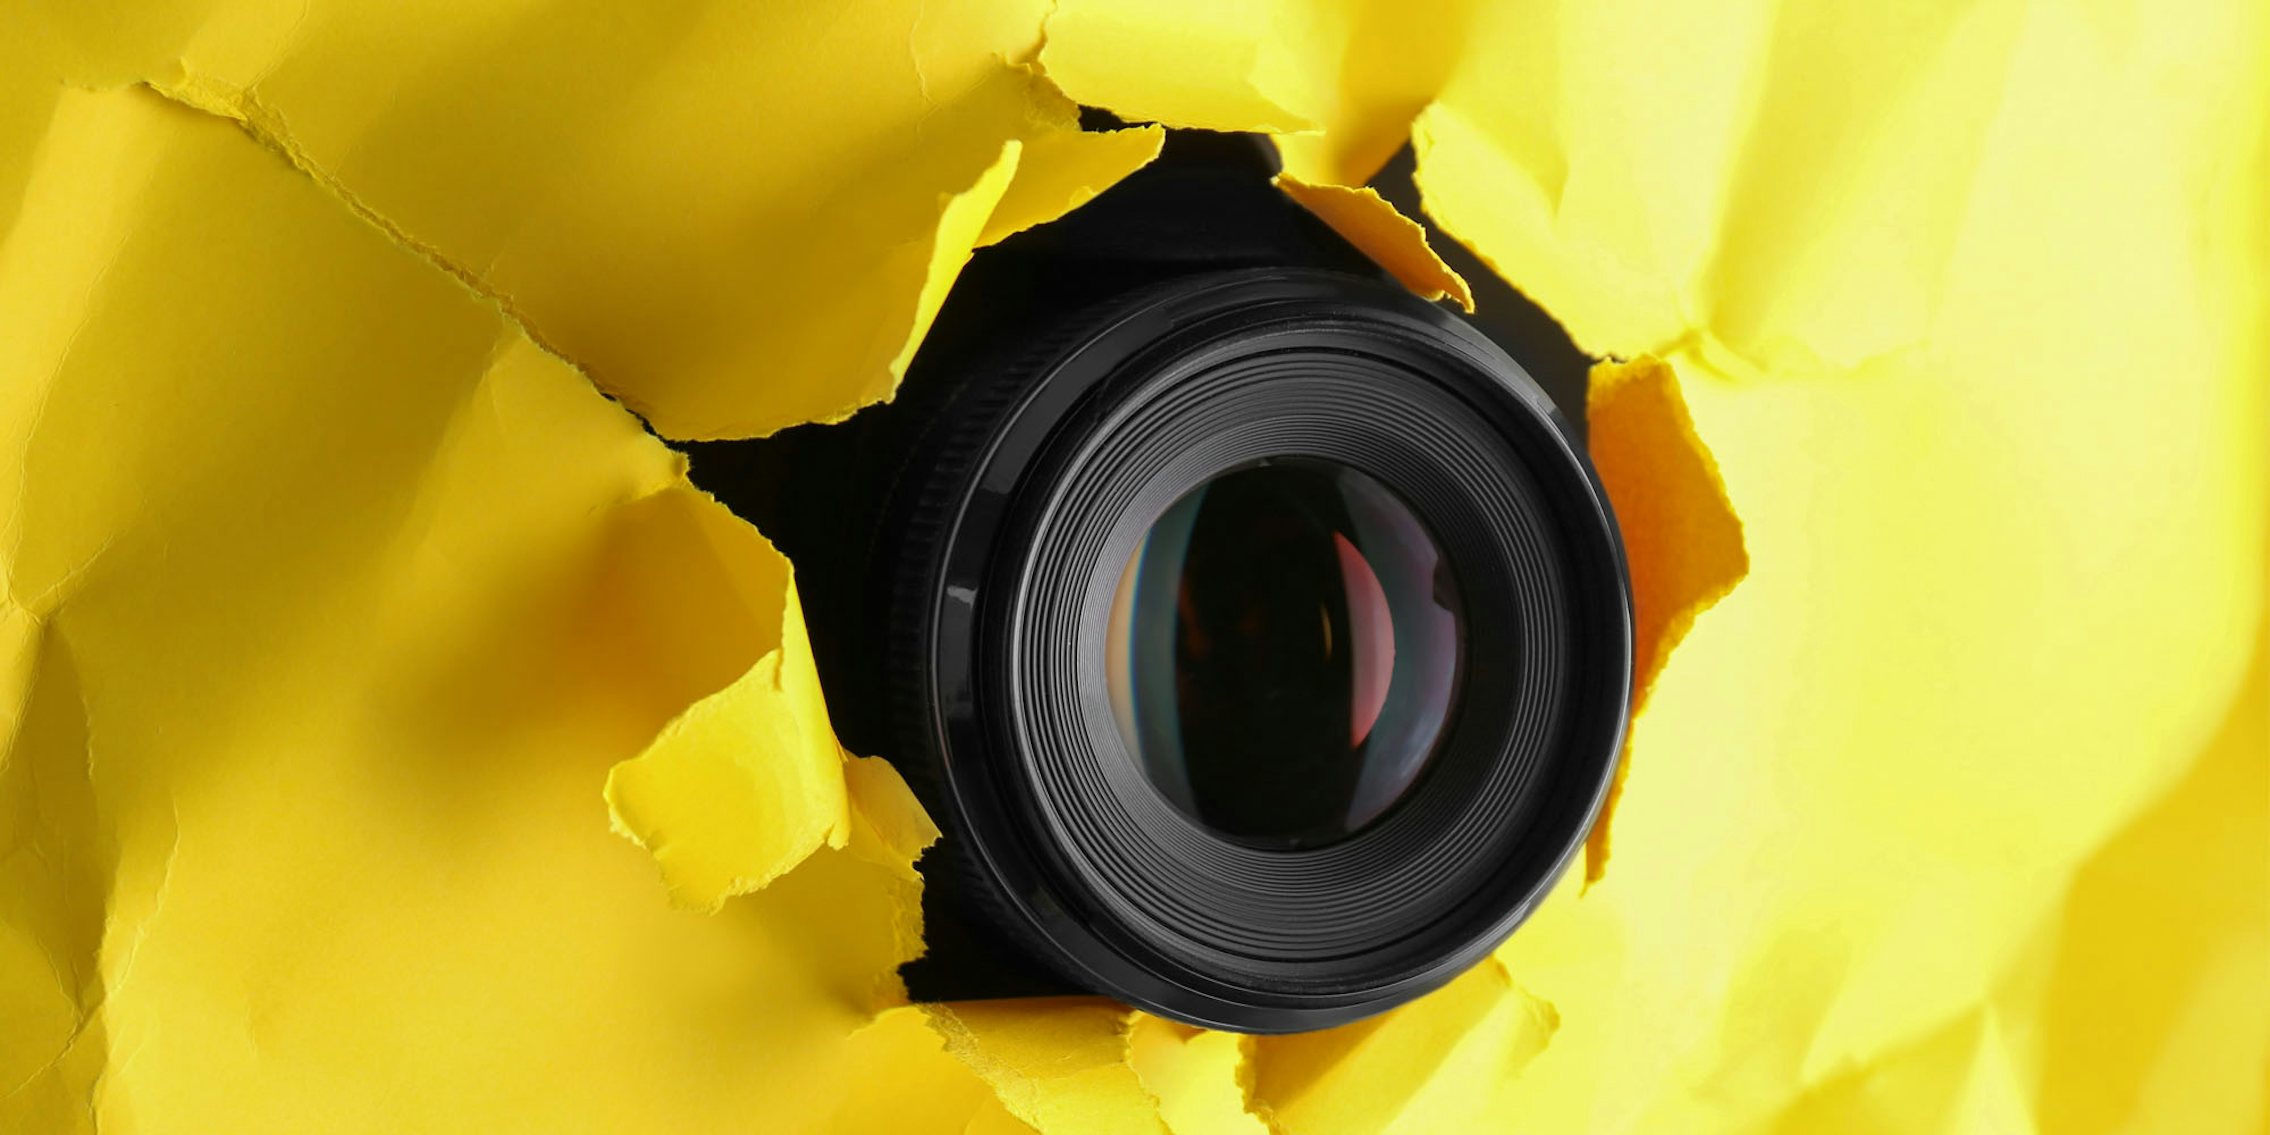 Camera lens popping through yellow paper